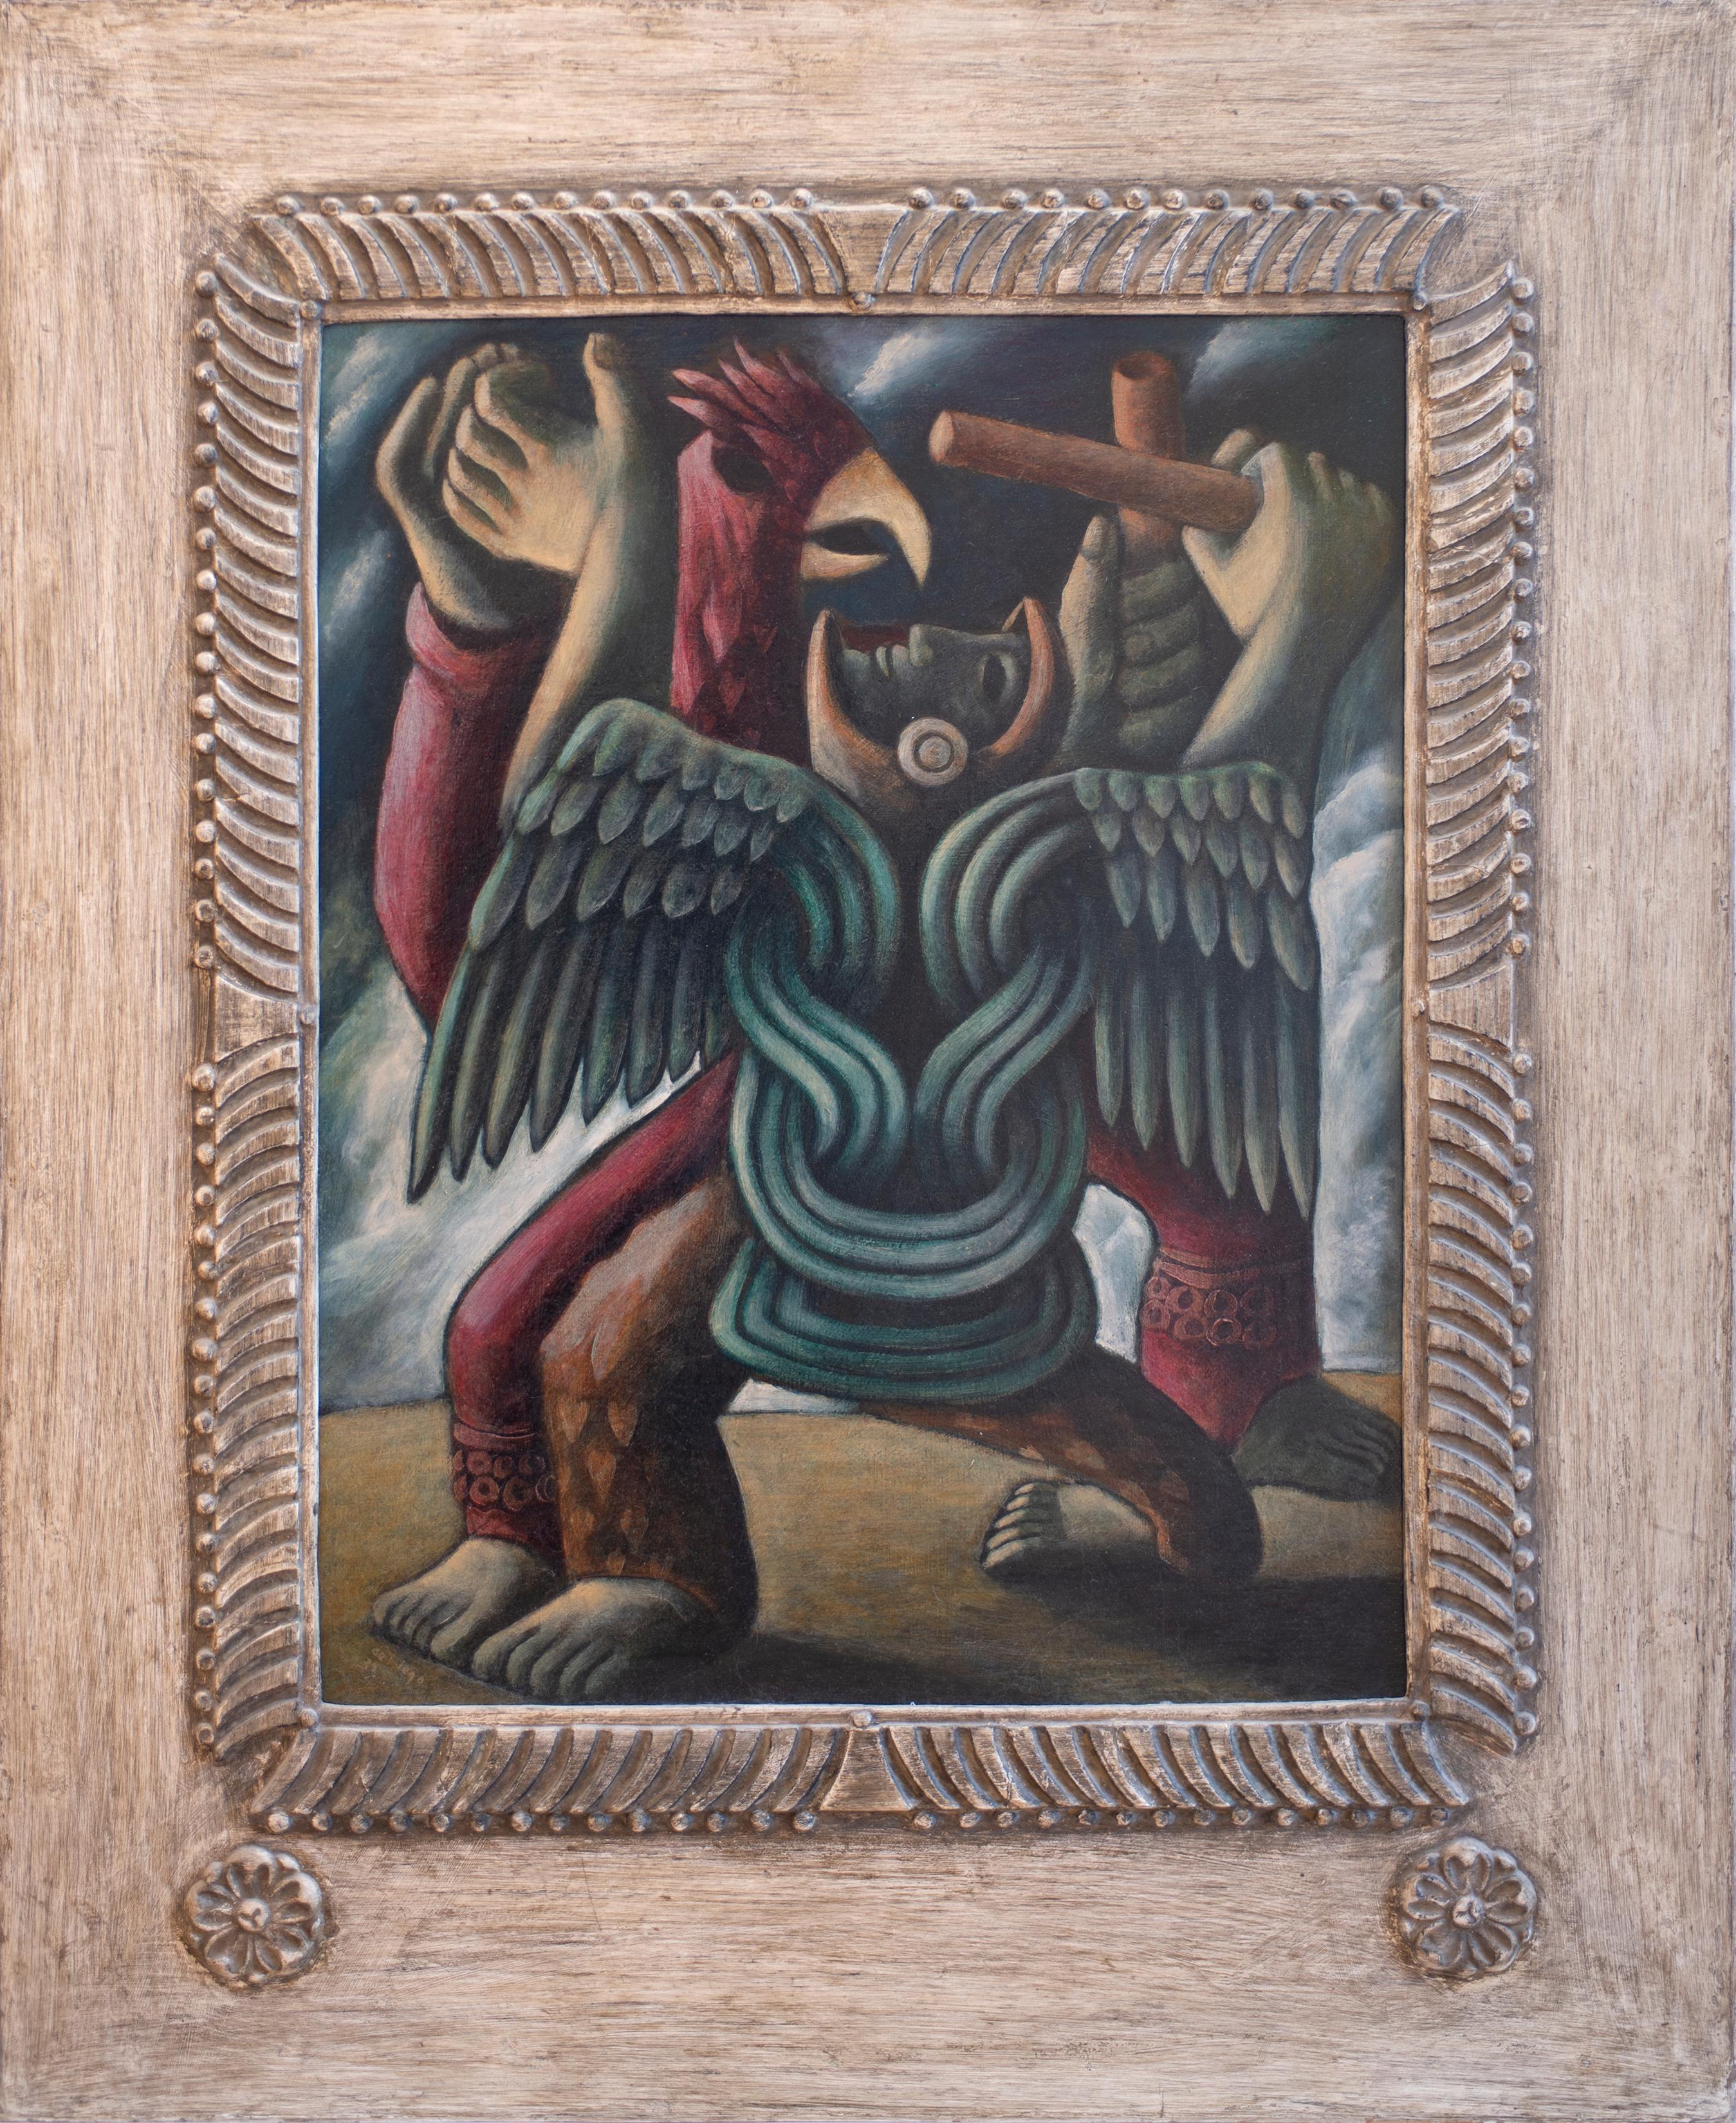 Julio de Diego Figurative Painting – Himmlische Phänomene